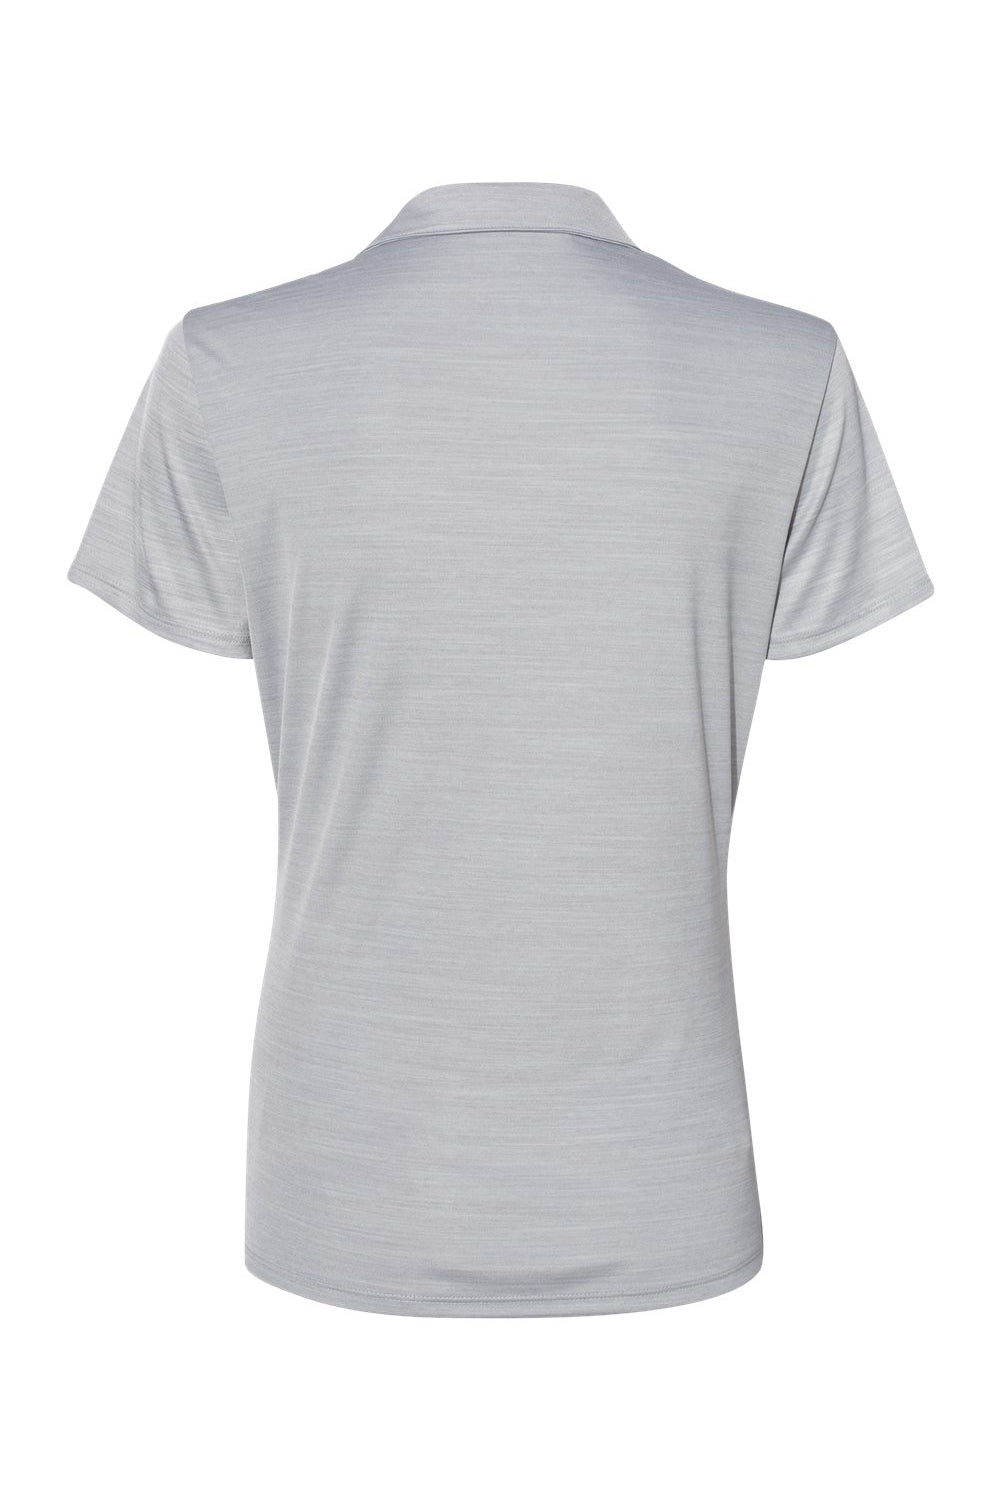 Adidas A403 Womens Melange Short Sleeve Polo Shirt Mid Grey Melange Flat Back